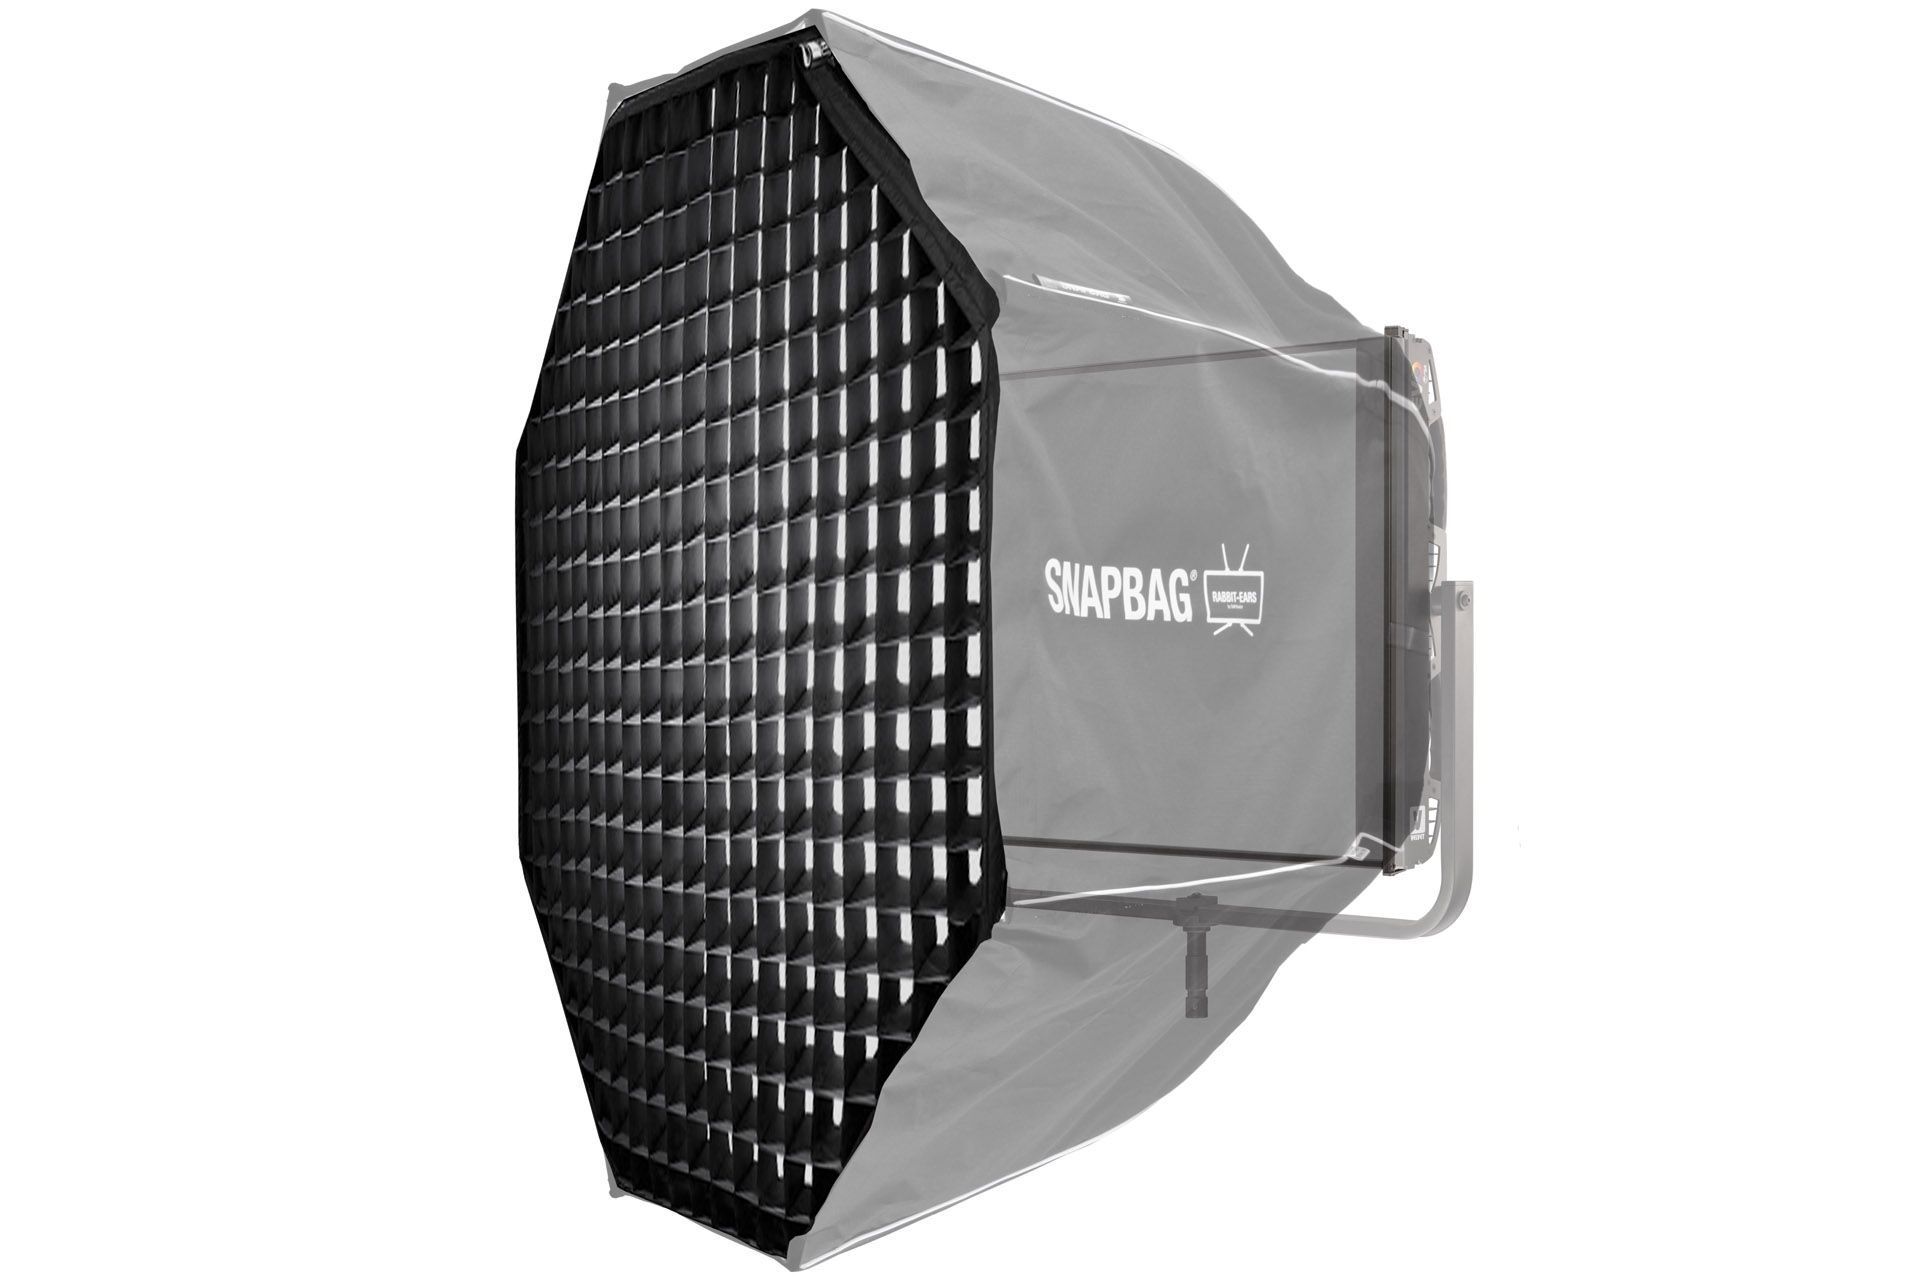 OCTA 7 foldable Snapgrid for Snapbag 2,1m diameter